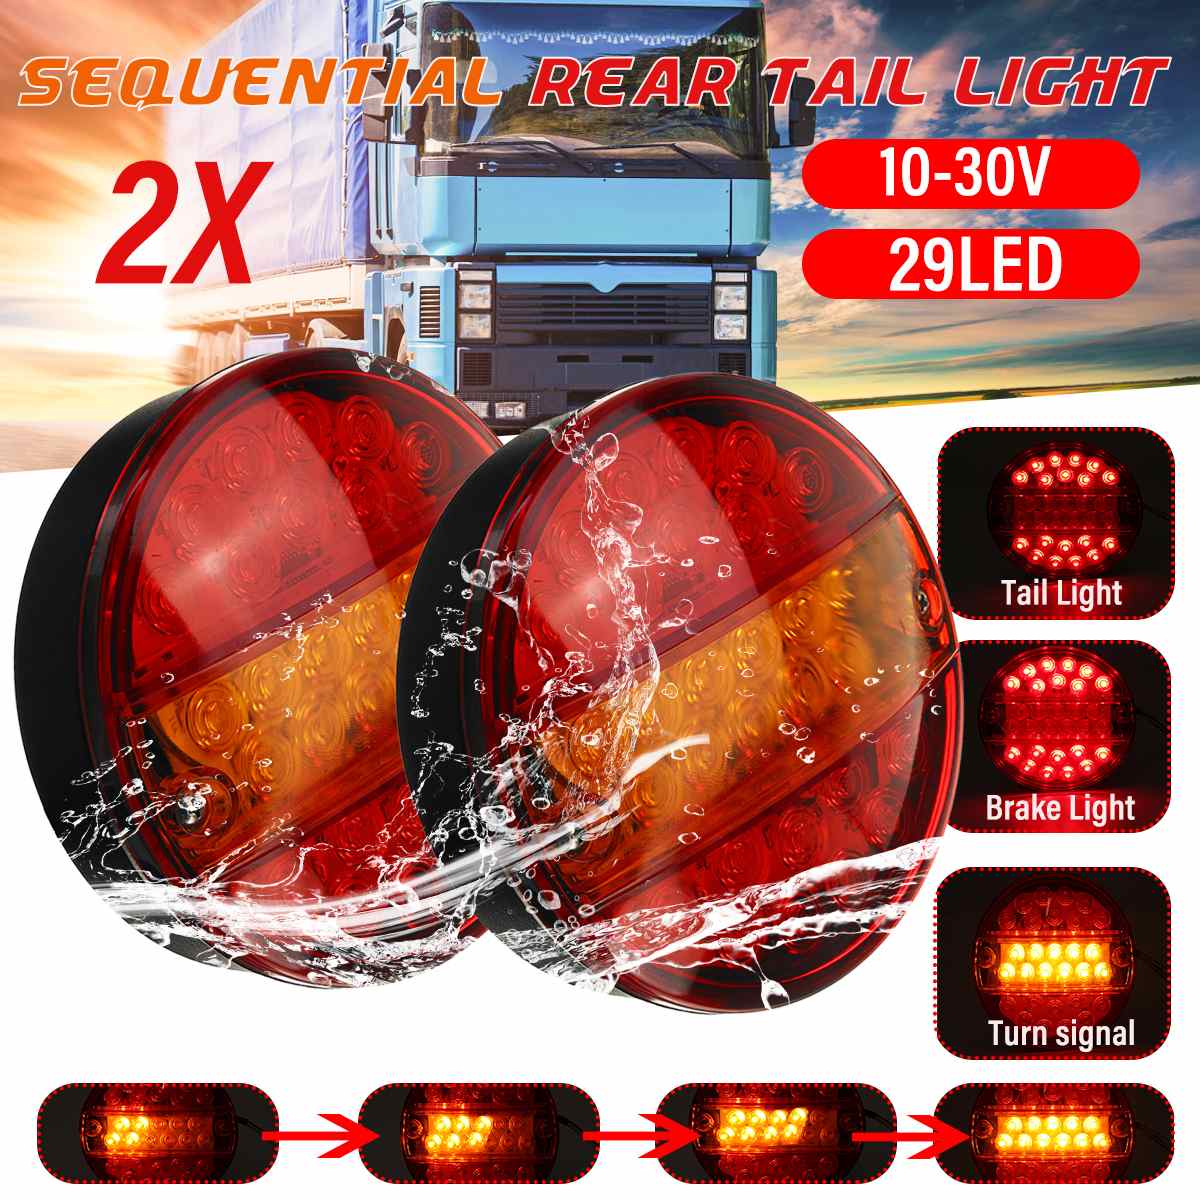 2Pcs 12V 24V Led Car Truck Tail Light Taillight Rear Brake Light Signal Lamp Indicator 4 Function for Trailer Lorry Bus